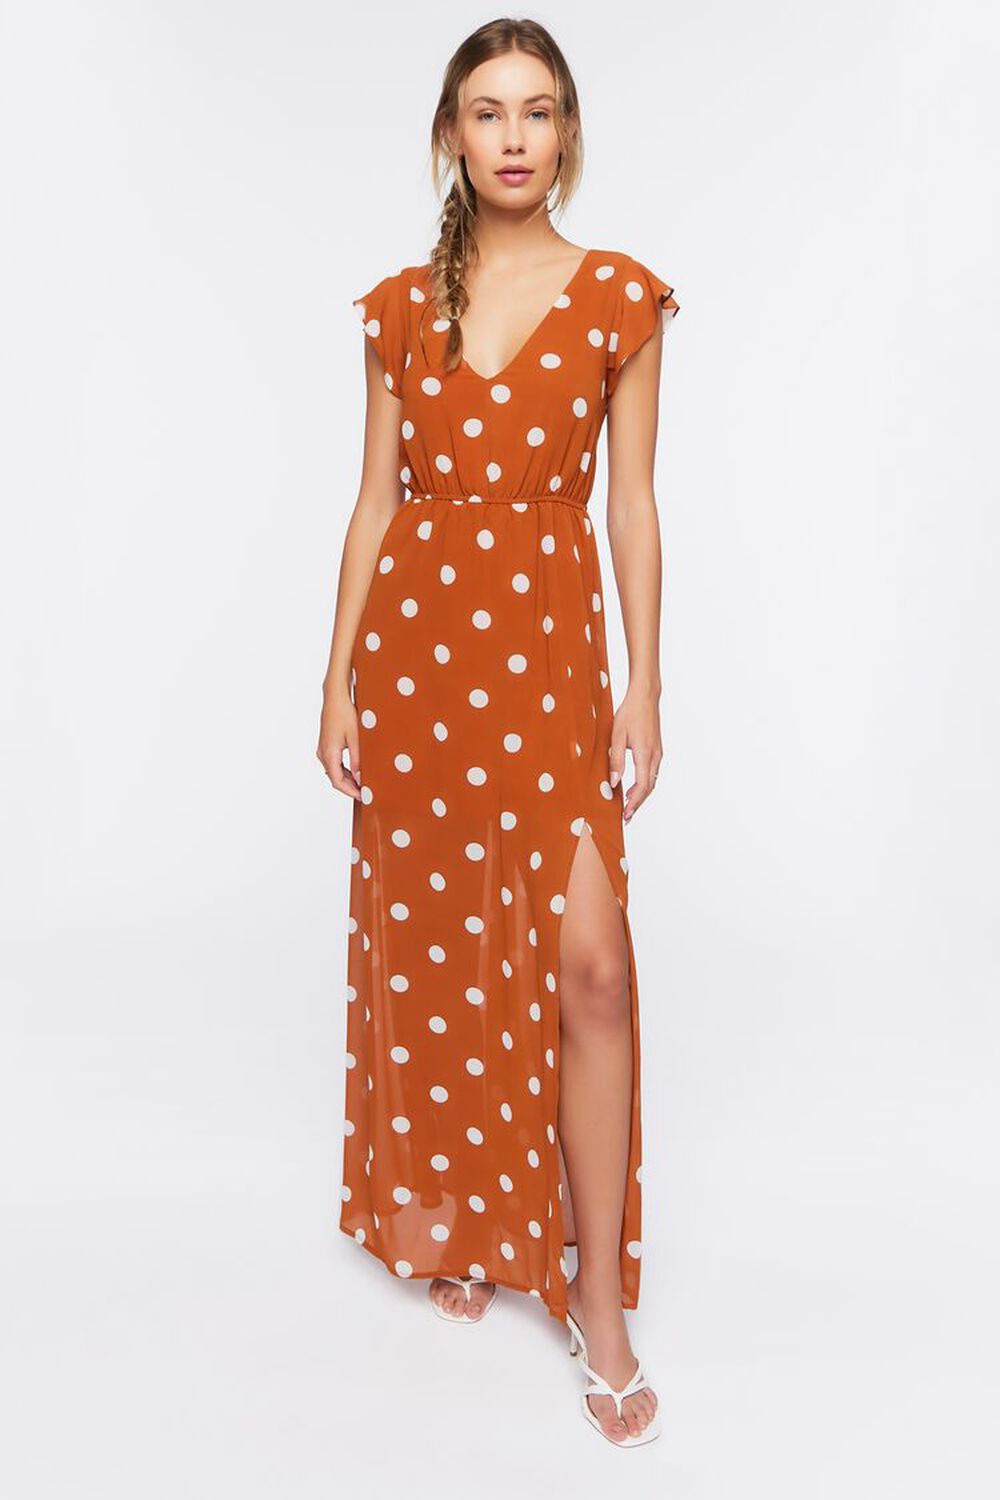 TAN/CREAM Polka Dot Butterfly-Sleeve Maxi Dress, image 1